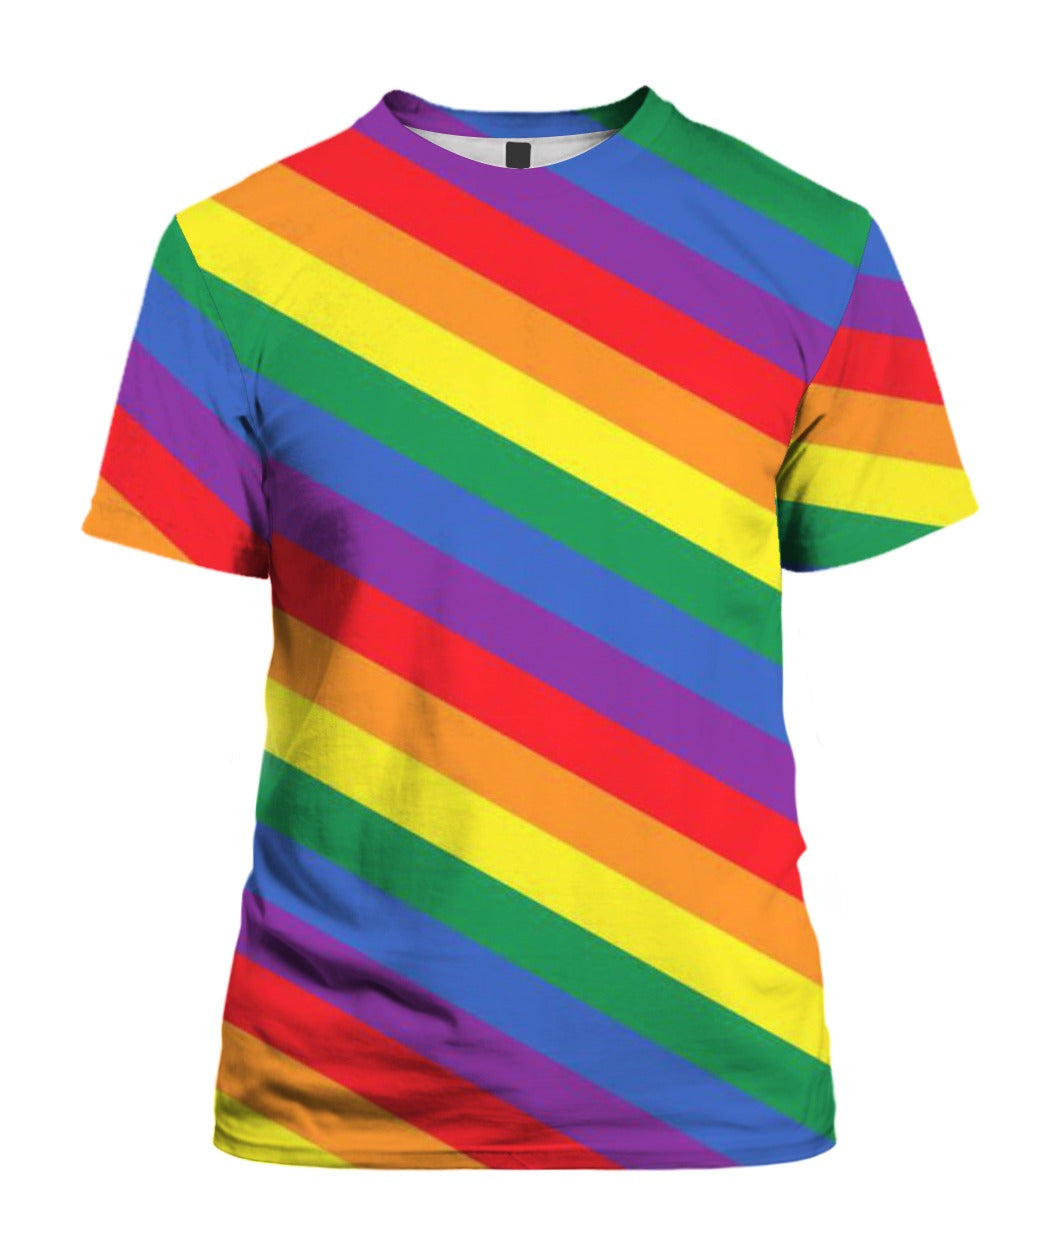 Lgbt Rainbow Striped 3D All Over Printed Shirt/ Sublimation Pride Full Printed Tee Shirt/ Rainbow Lgbtq 3D Shirts For Gay Lesbian